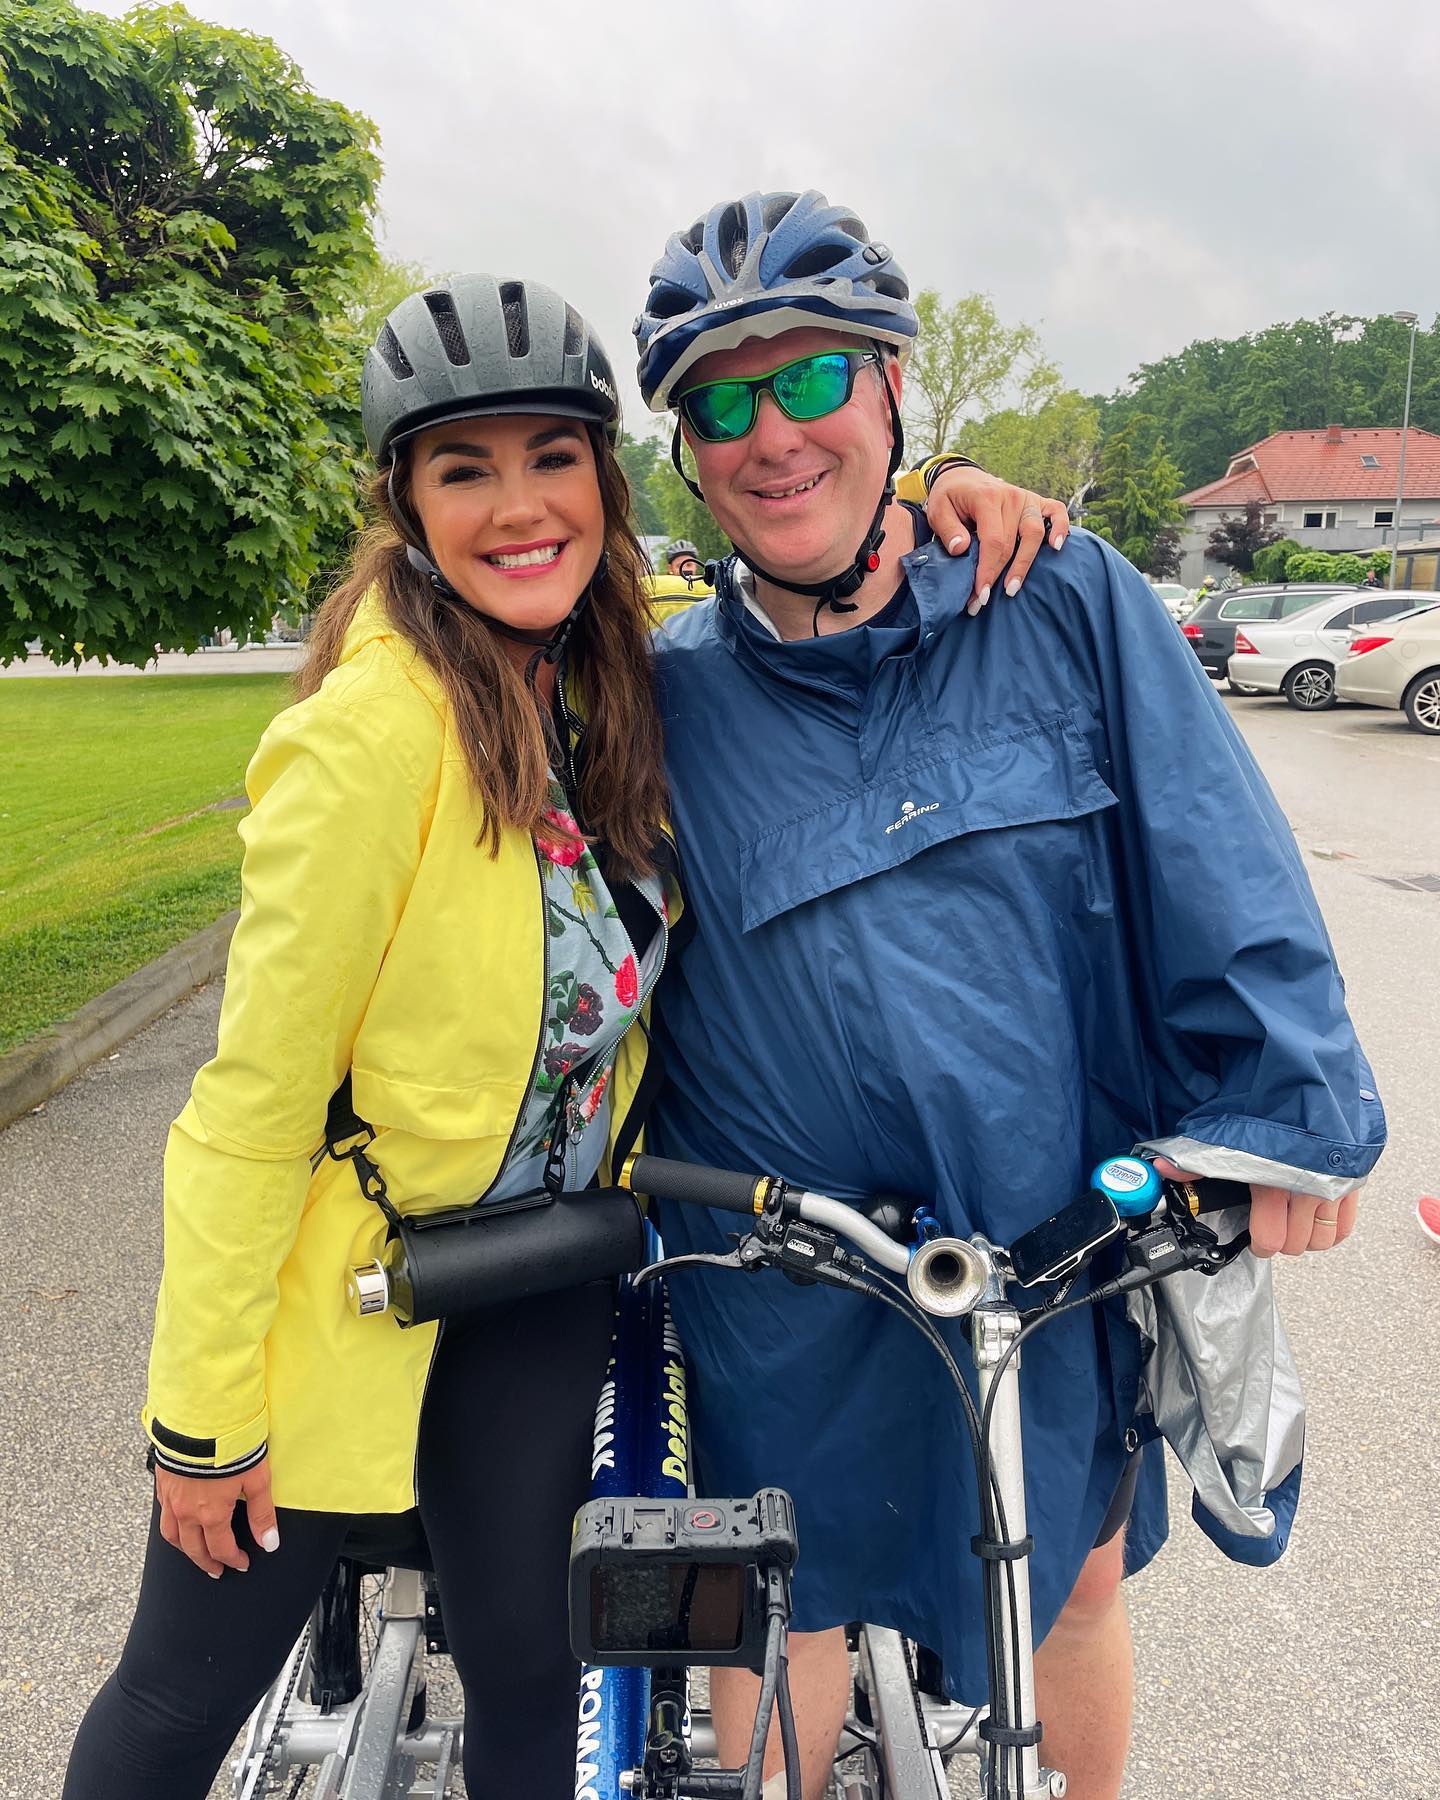 Rebeka in Miha kolesarita v dežju. Vir: Instagram